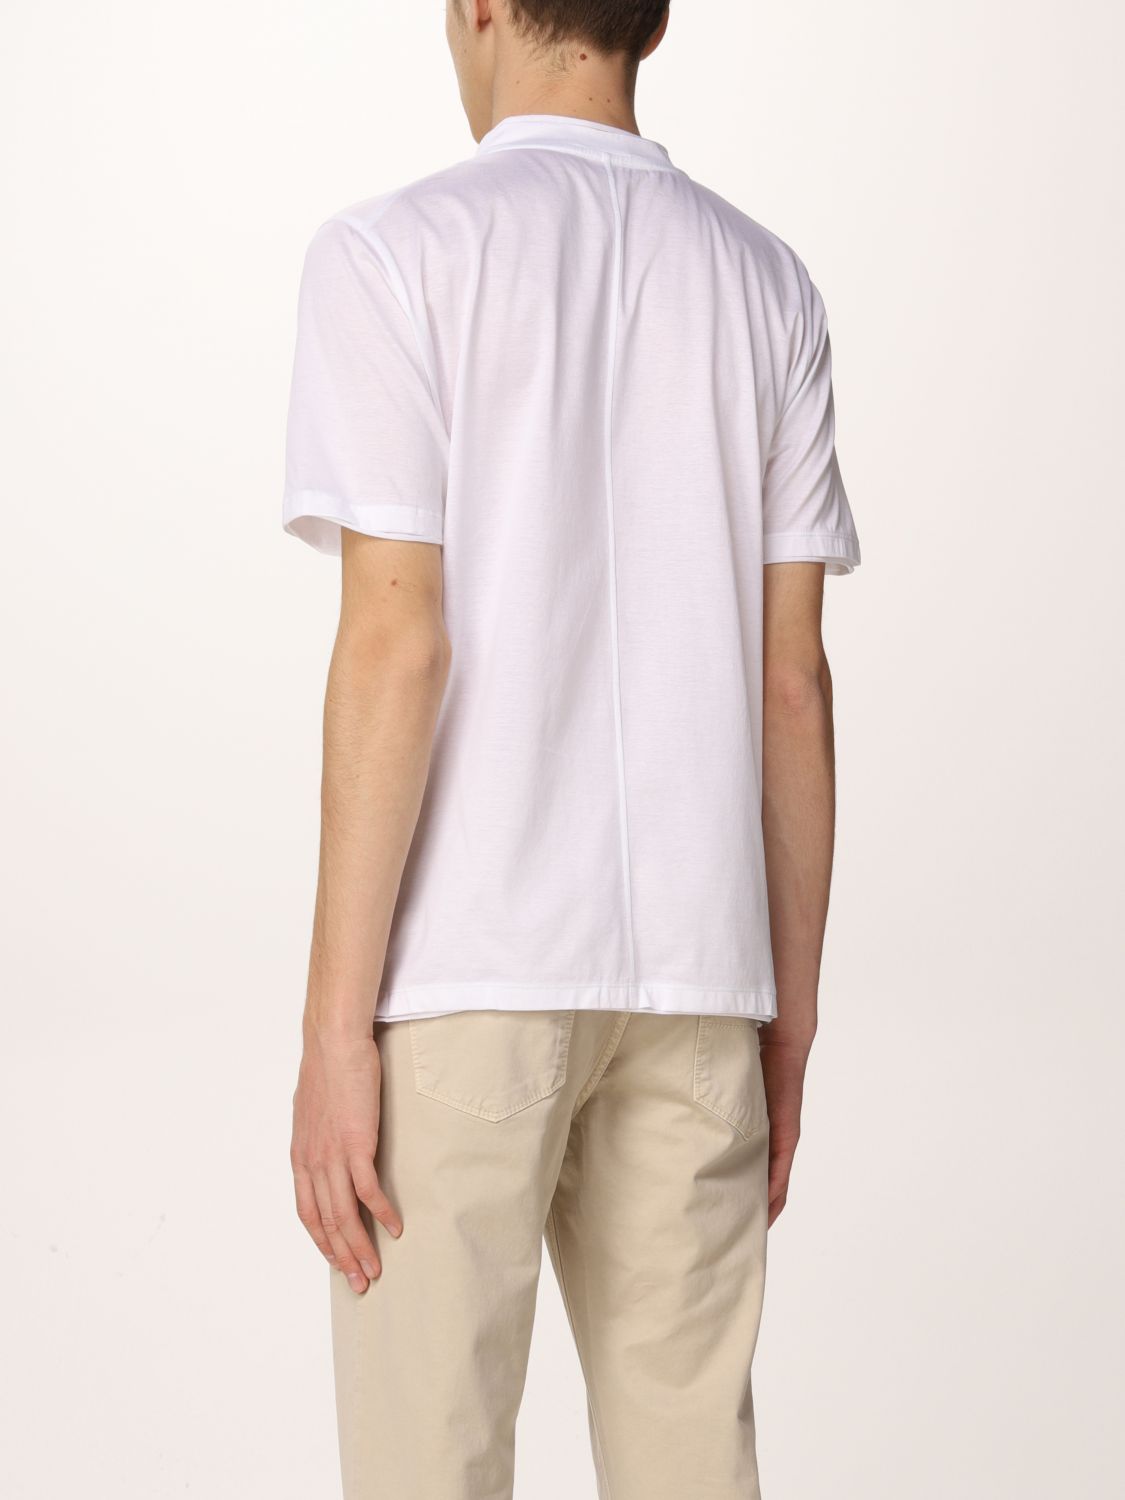 Tシャツ Paolo Pecora: Tシャツ Paolo Pecora メンズ ホワイト 2